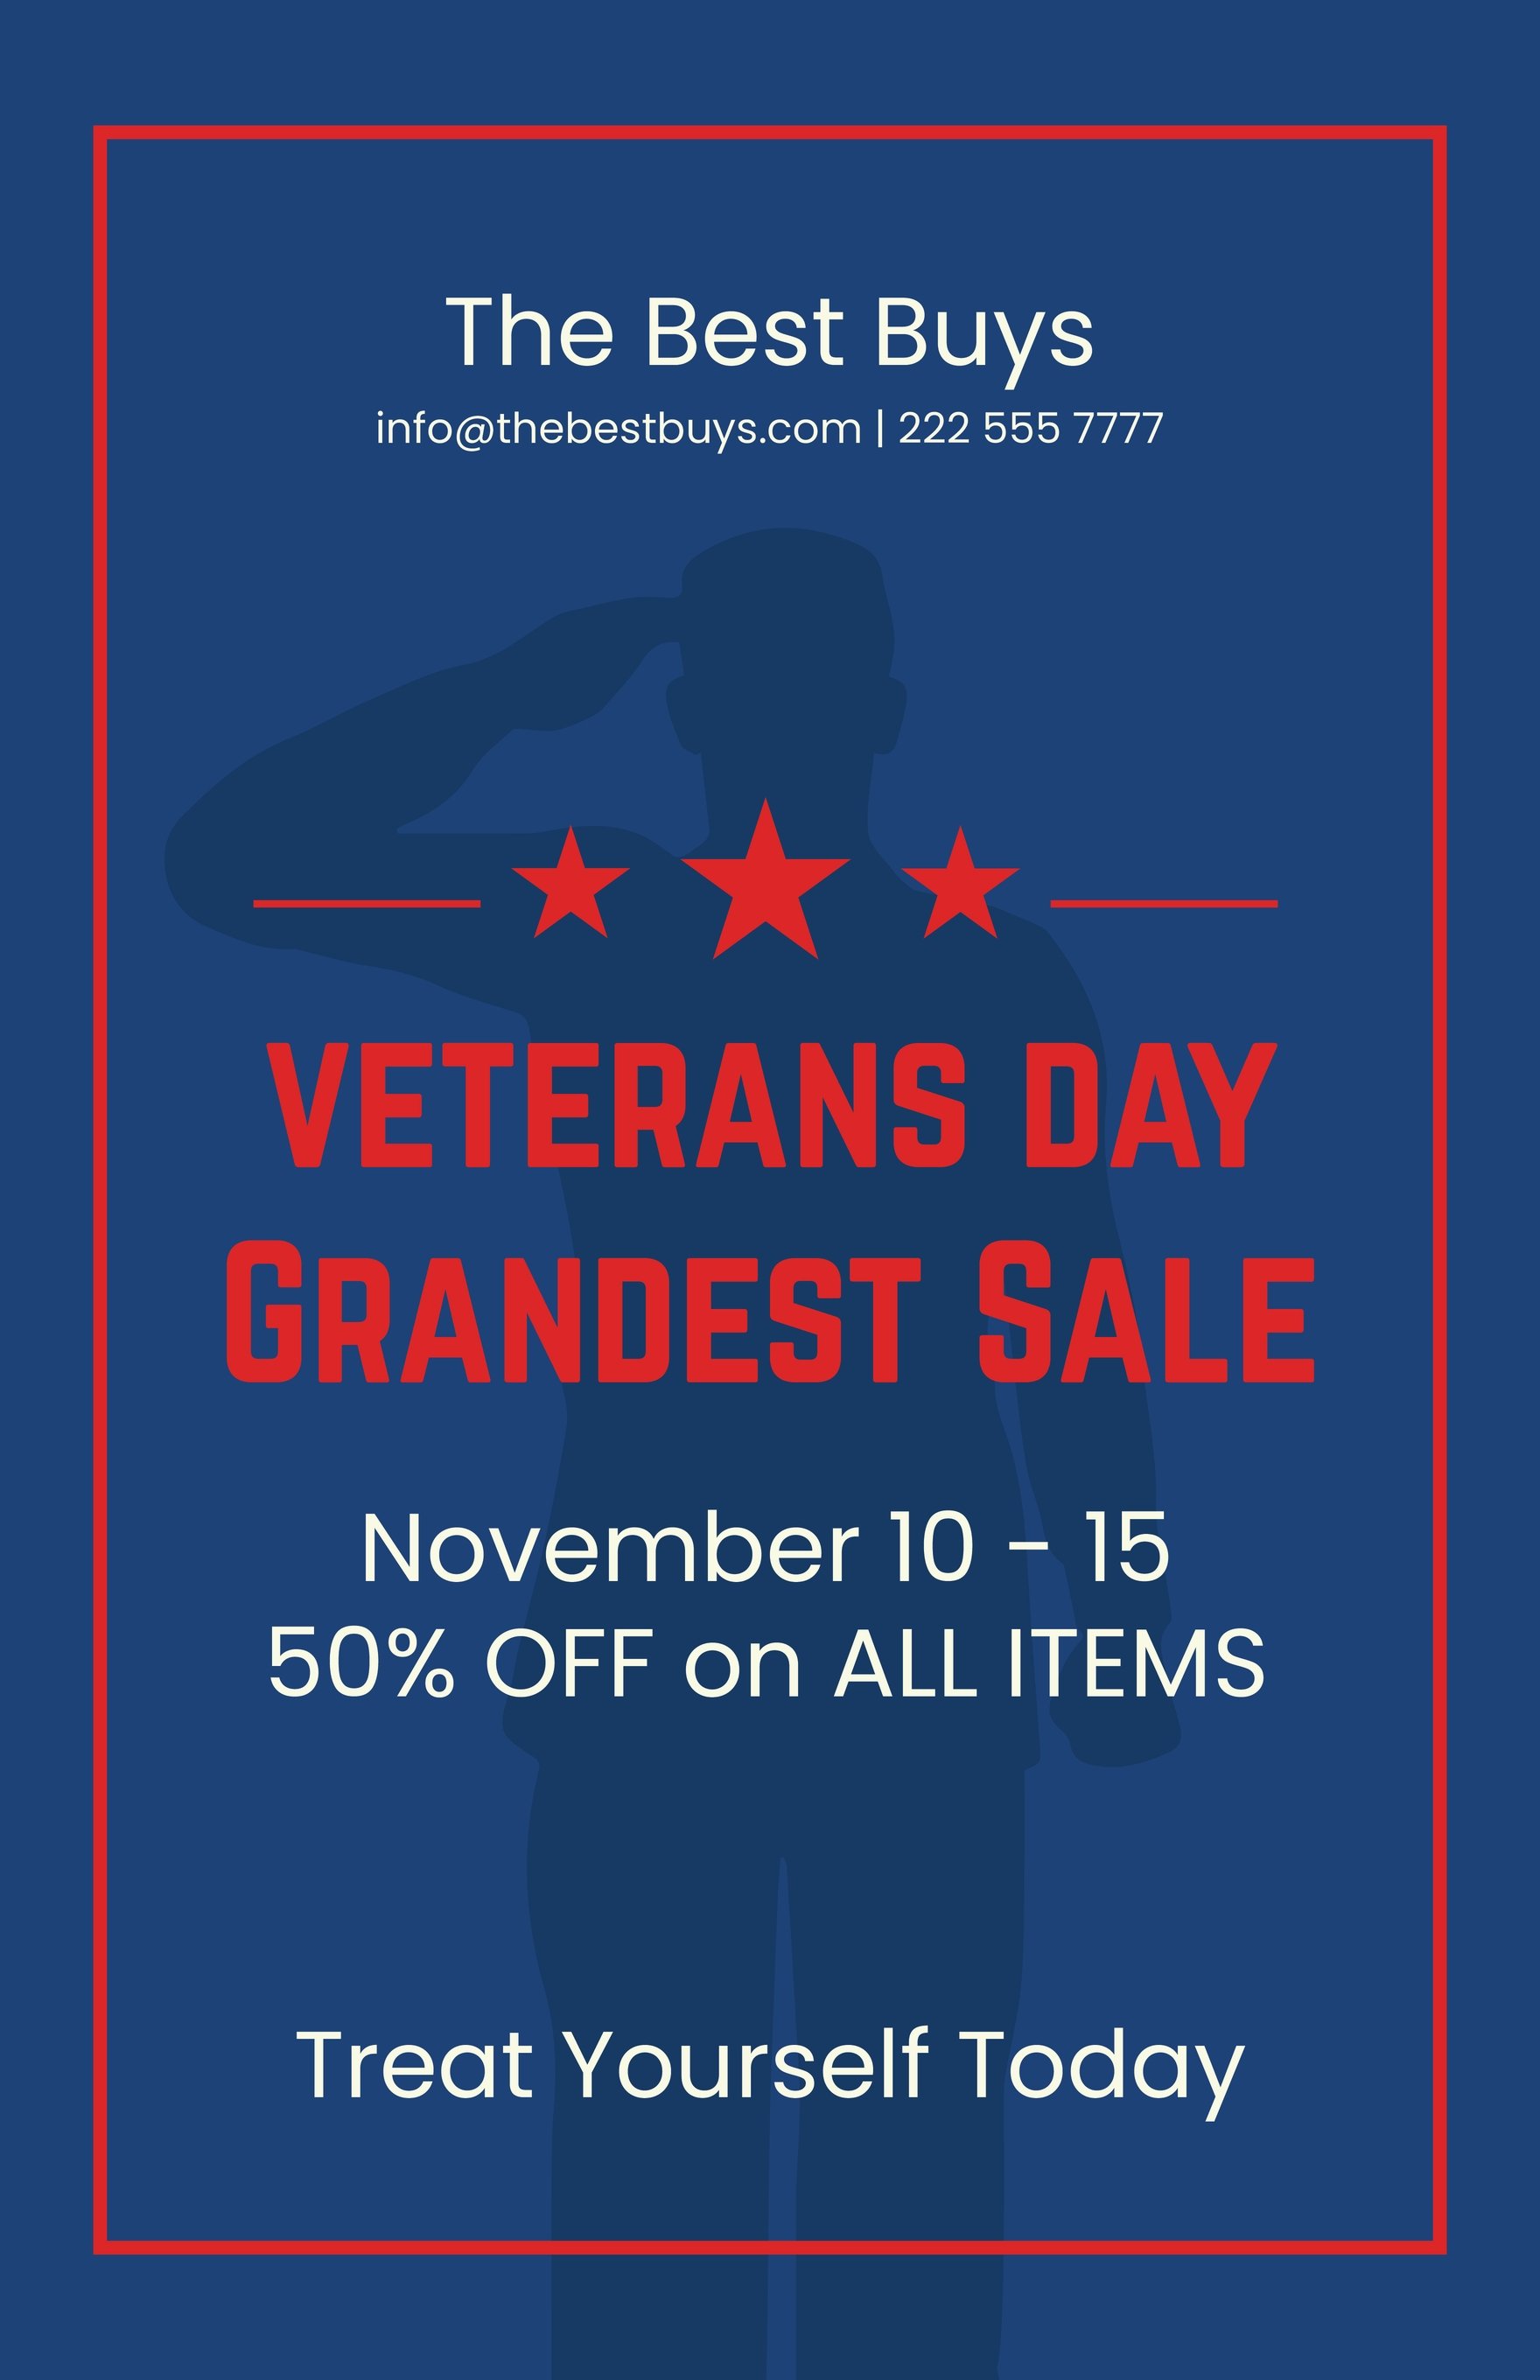 Veterans Day Advertisement Poster